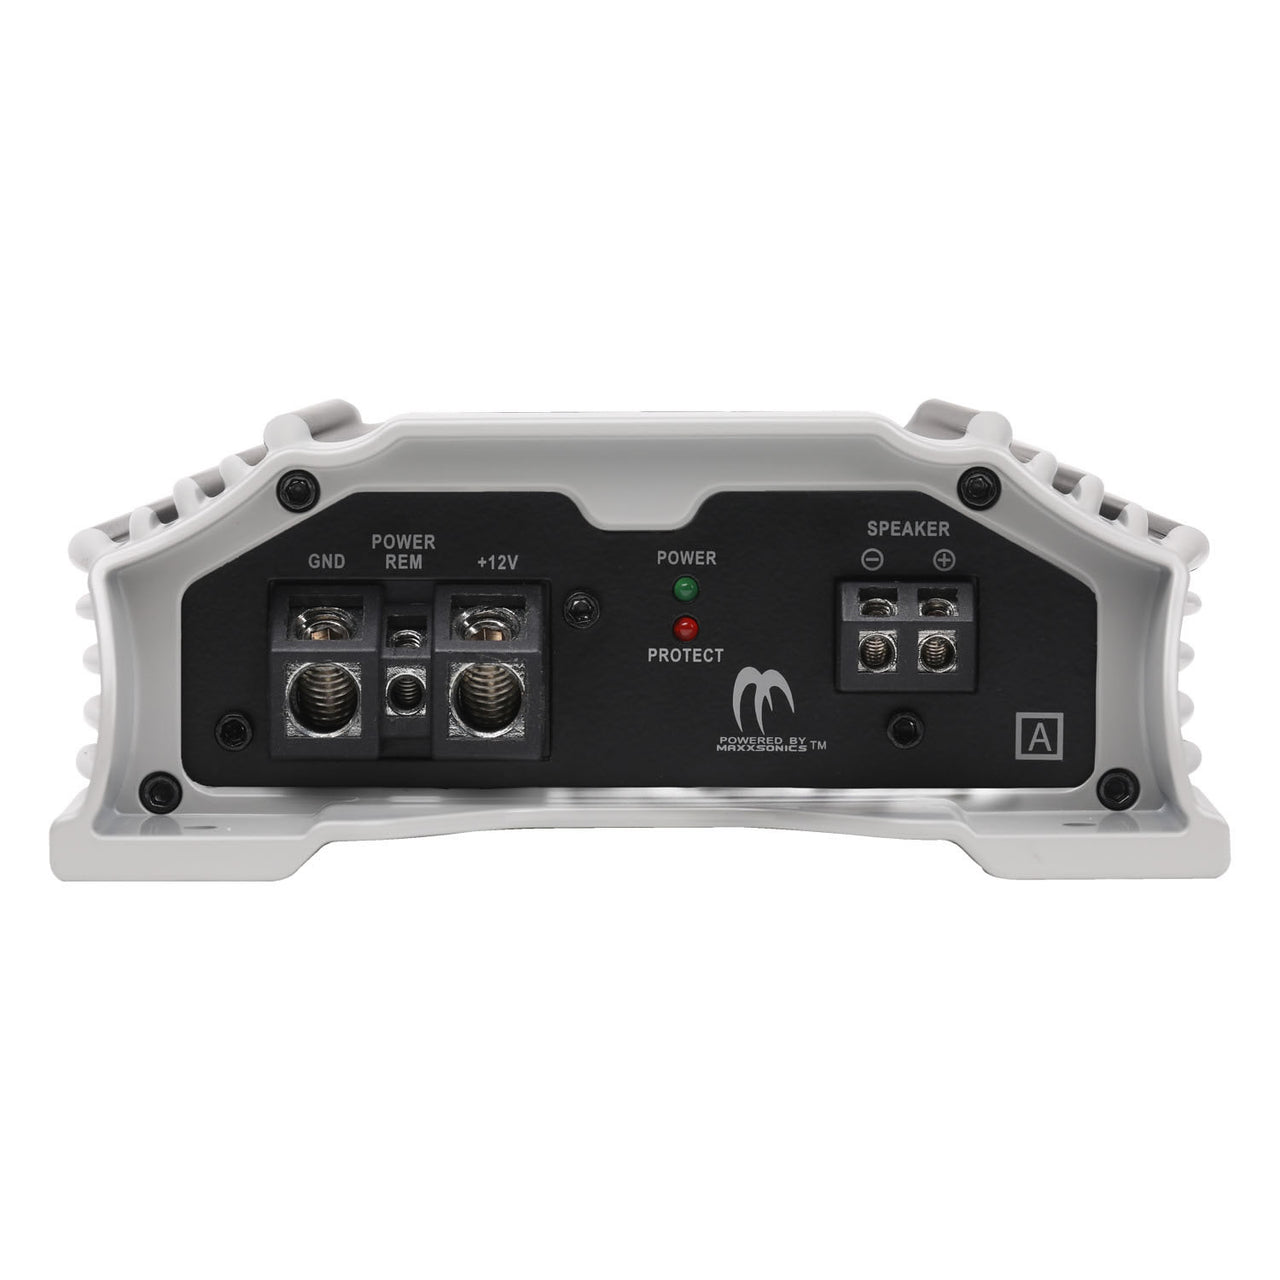 Crunch PZ2-3030.1D 3000 Watt Mono Amplifier 1 Ohm Stable Car Audio Amplifier